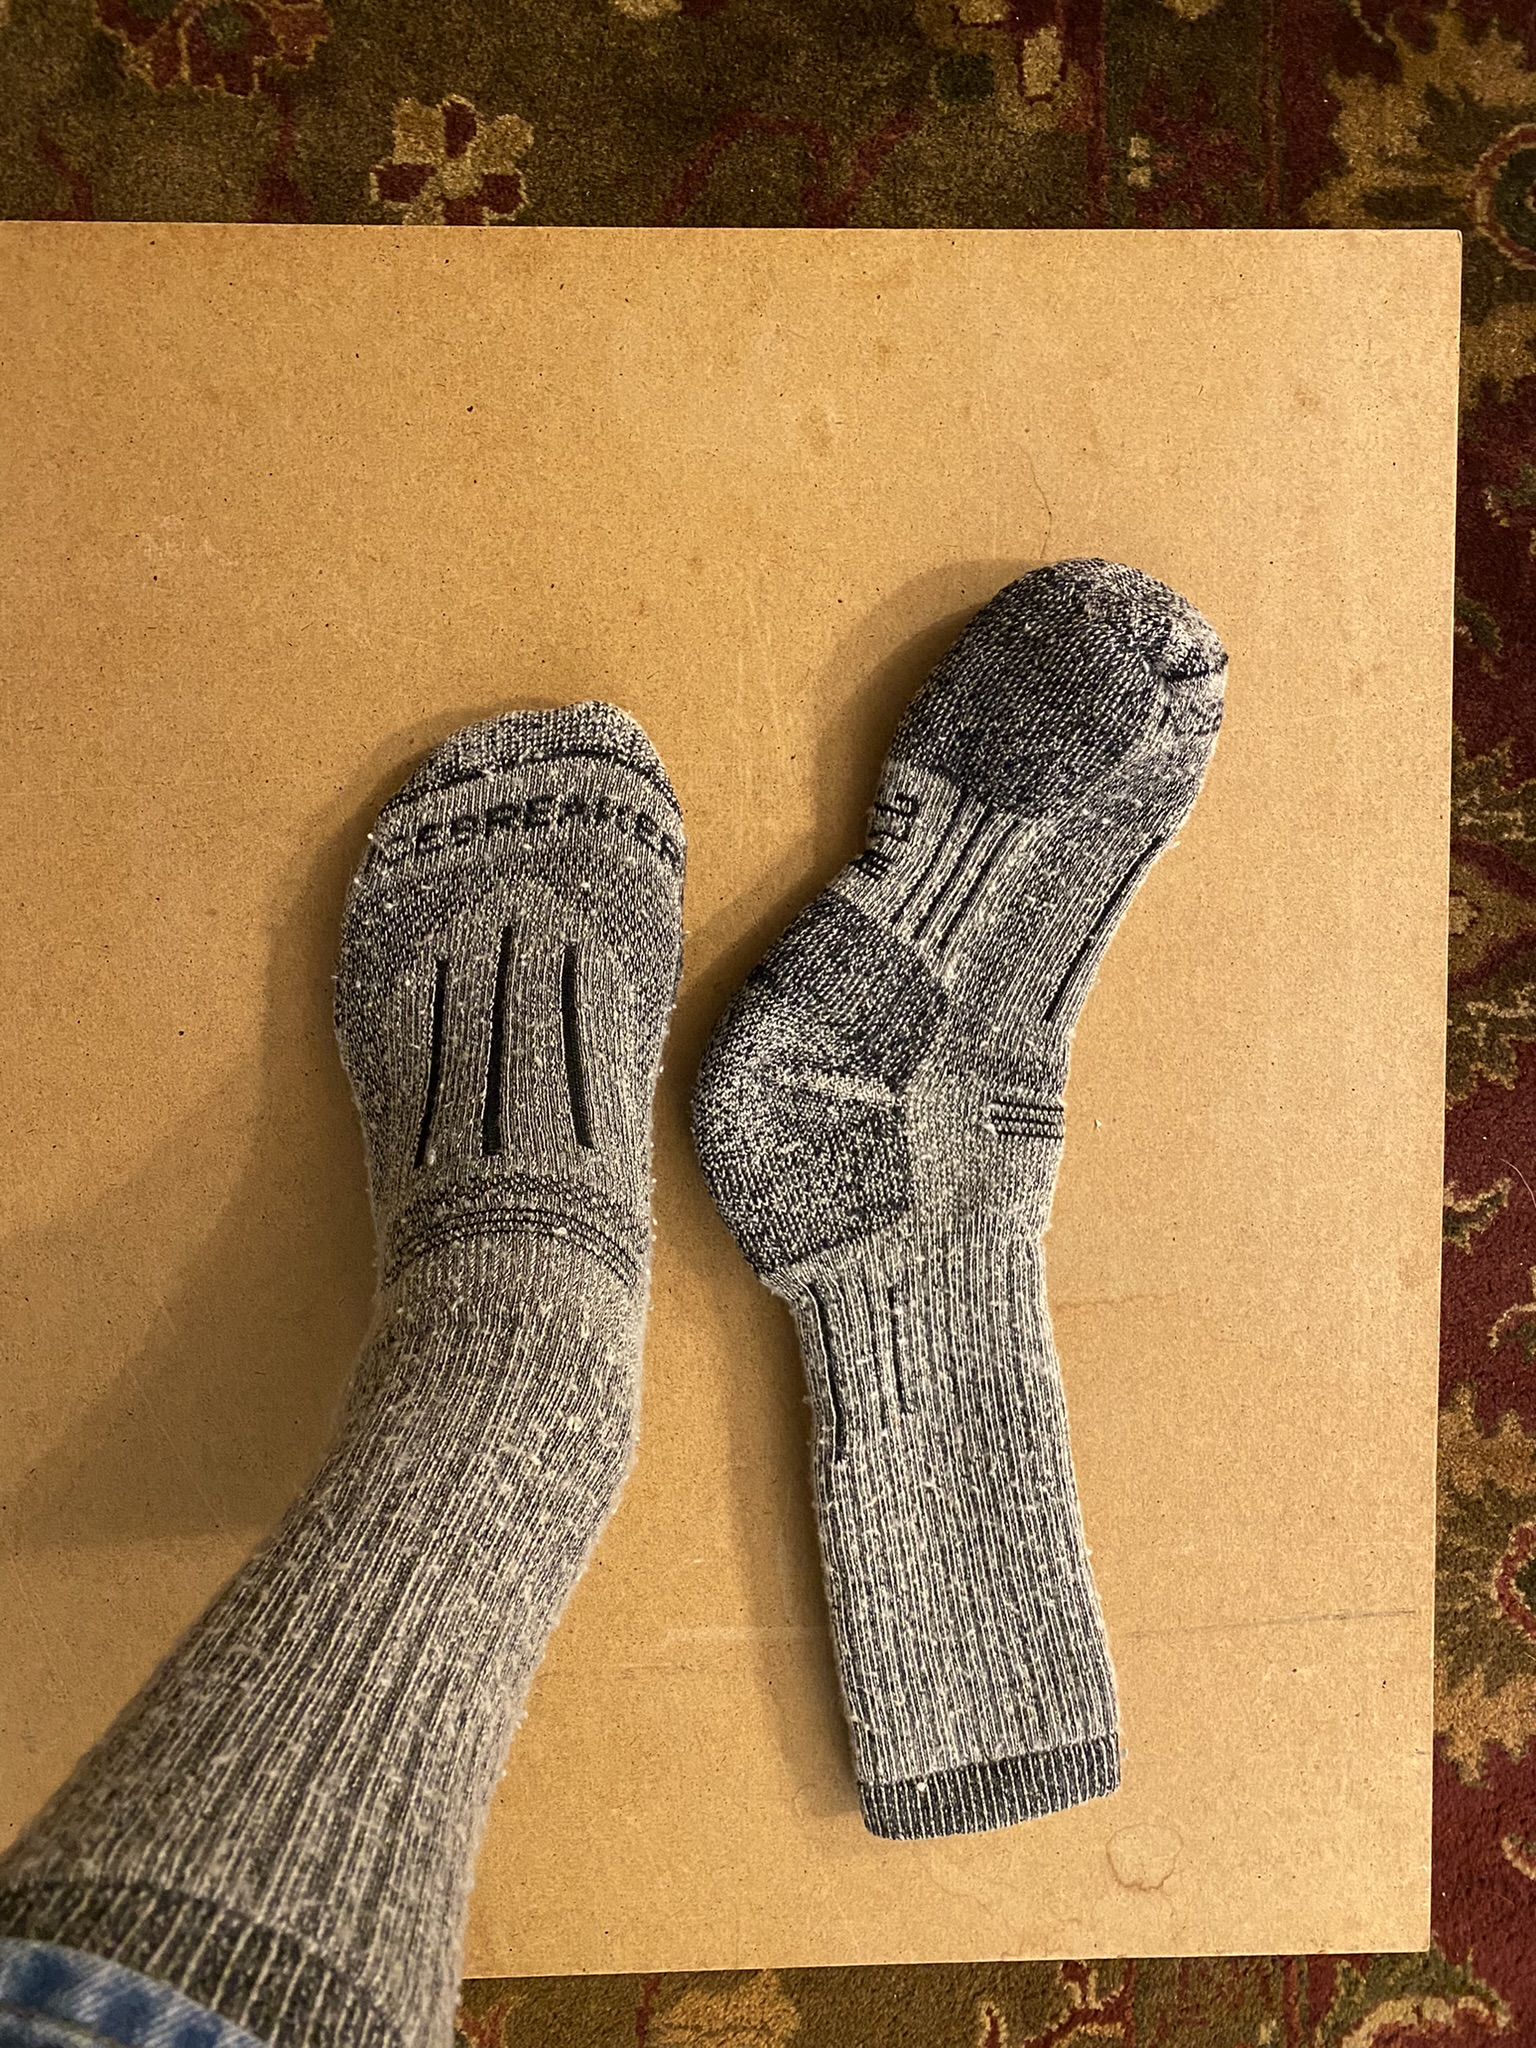 foot-socks.JPEG